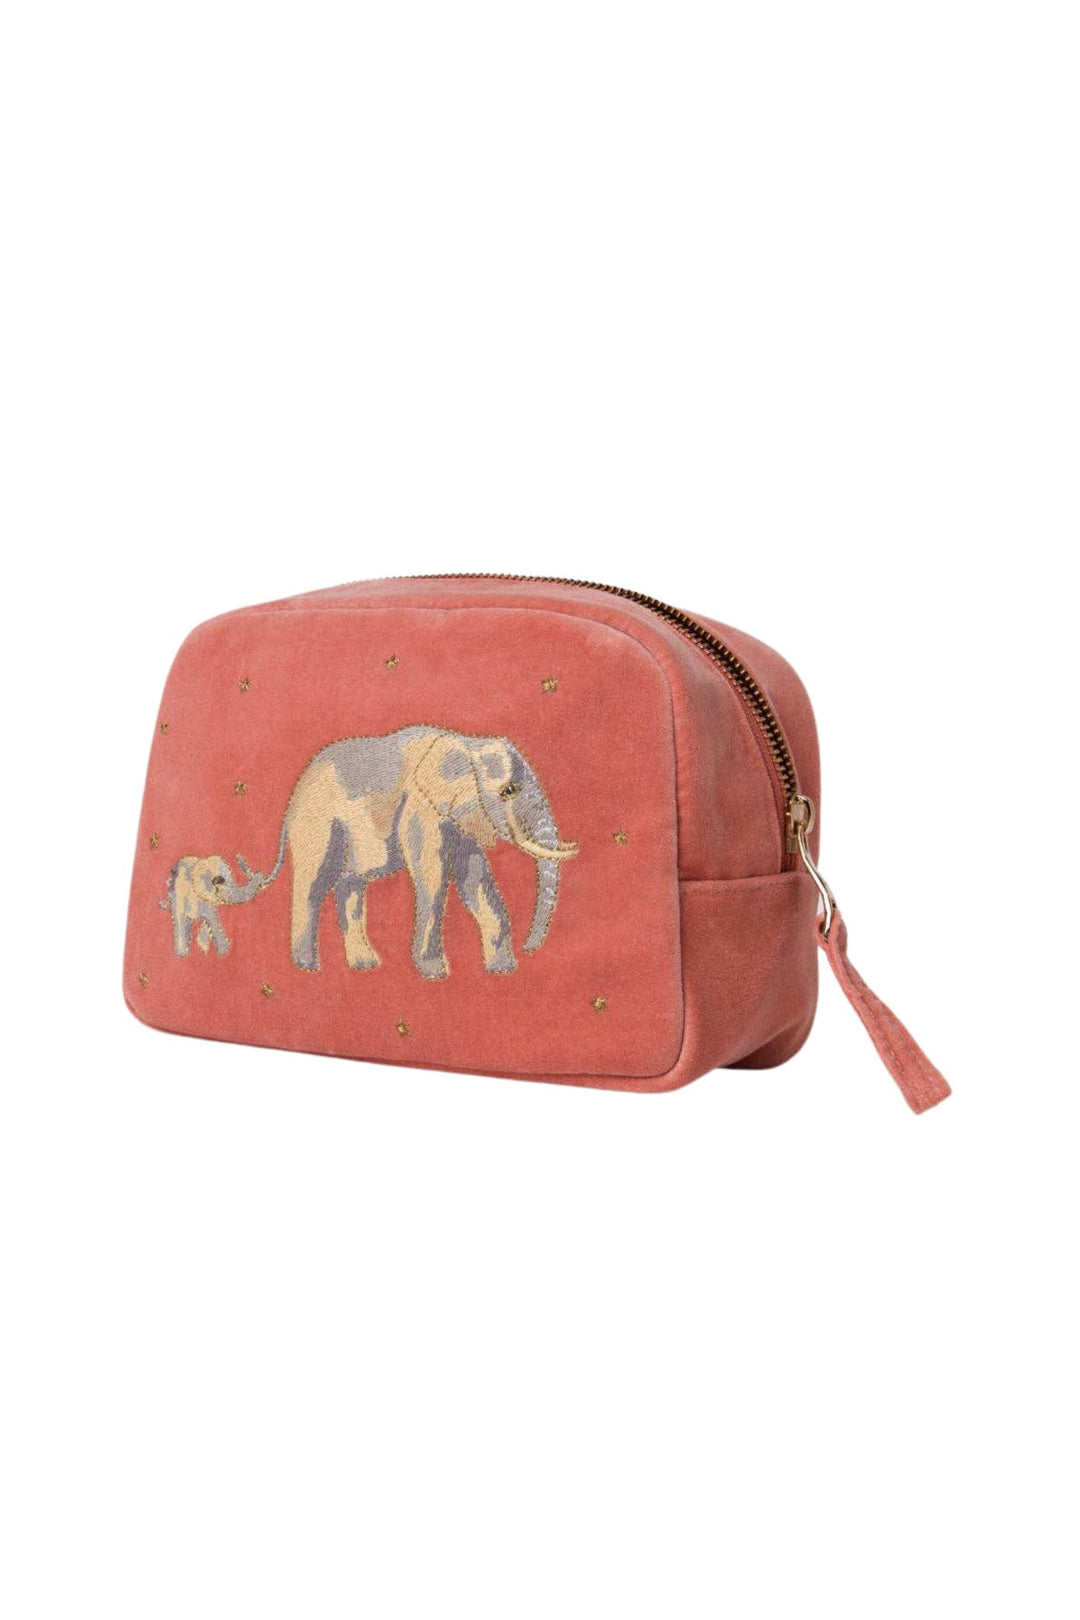 Elizabeth Scarlett Peach Elephant Conservation Cosmetics Bag